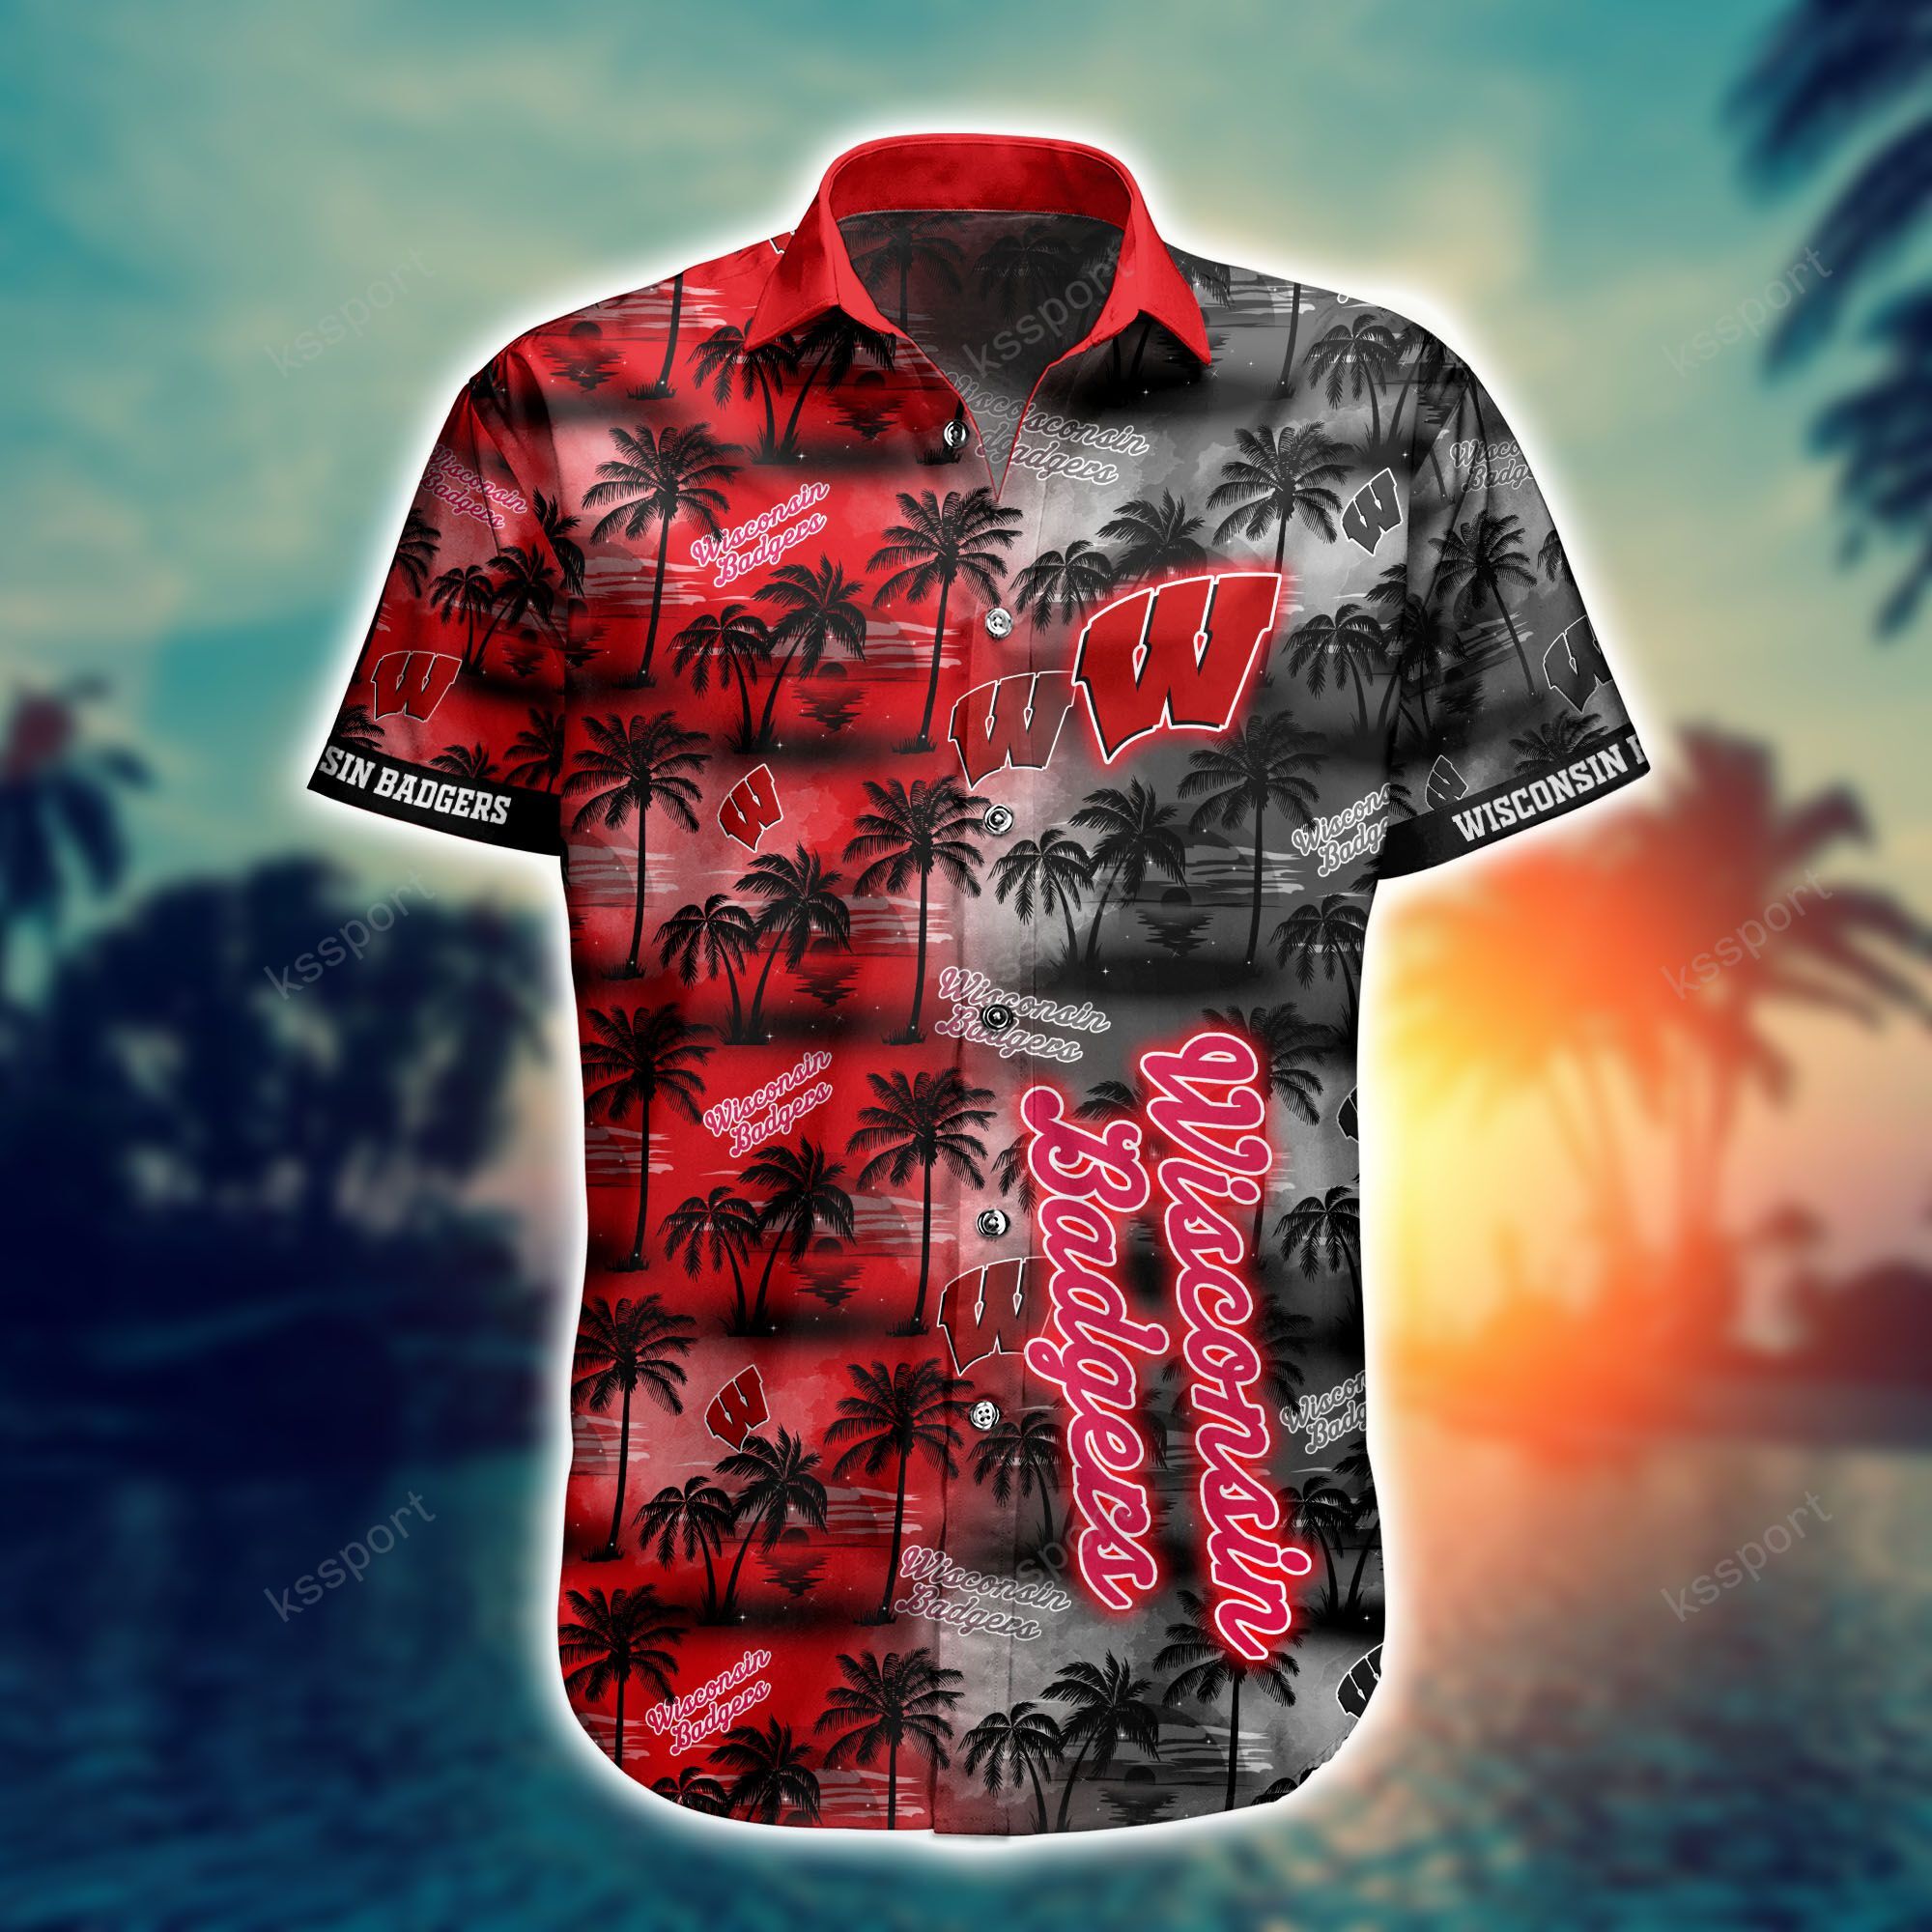 Hawaiian shirt and shorts is a great way to look stylish at a beach party 112